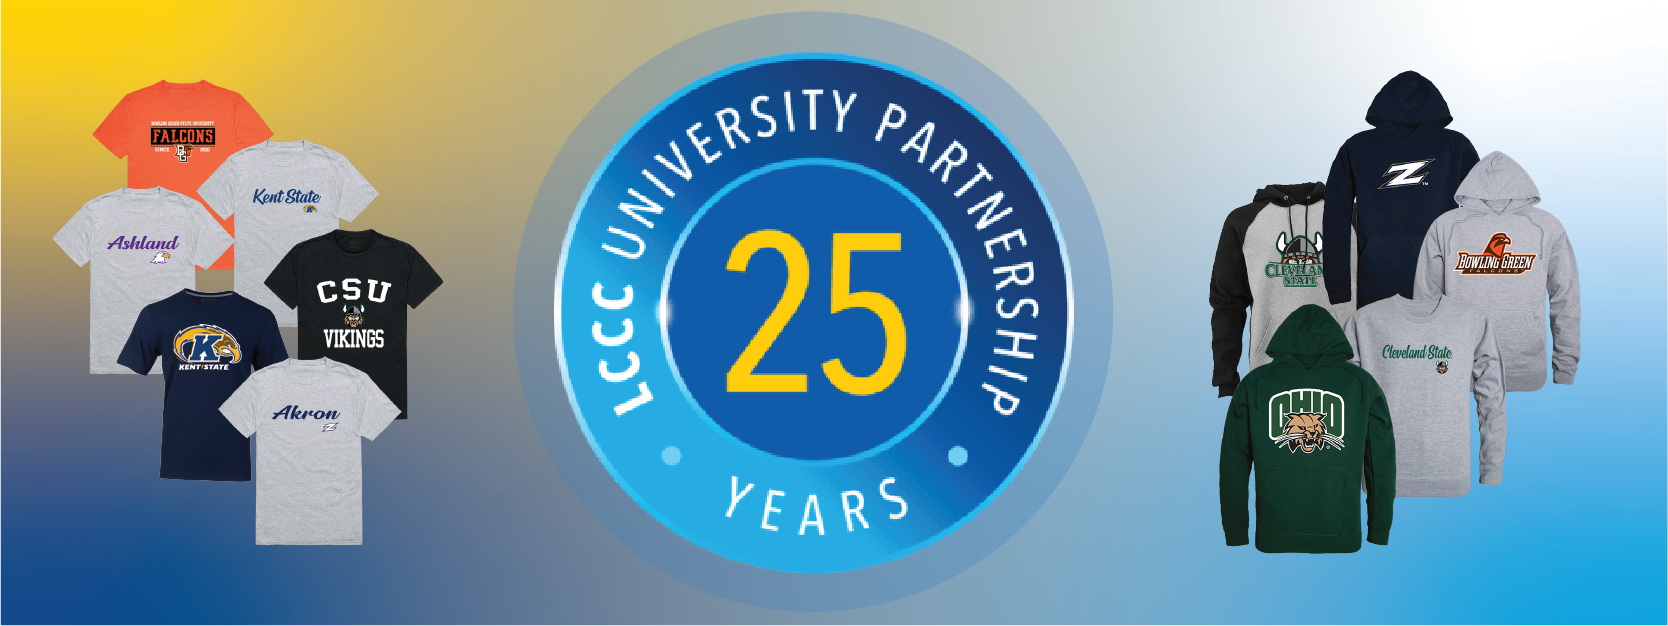 25 yrs of the University Partnership